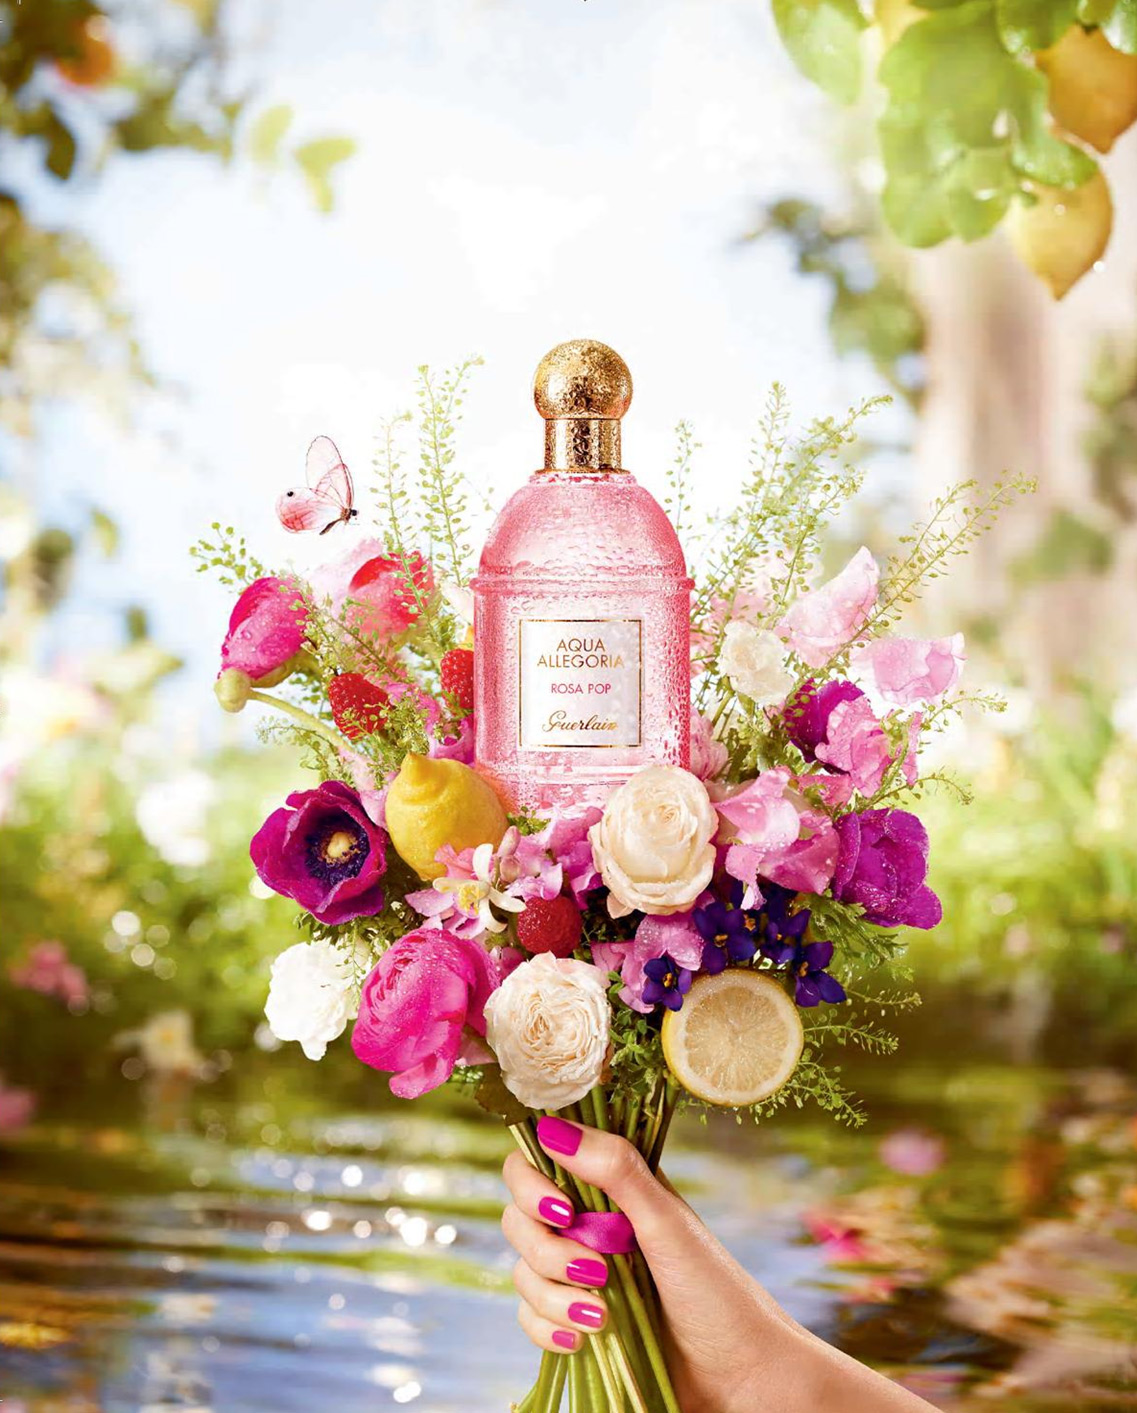 Aqua Allegoria Rosa Pop Guerlain perfume - a new fragrance for women 2016